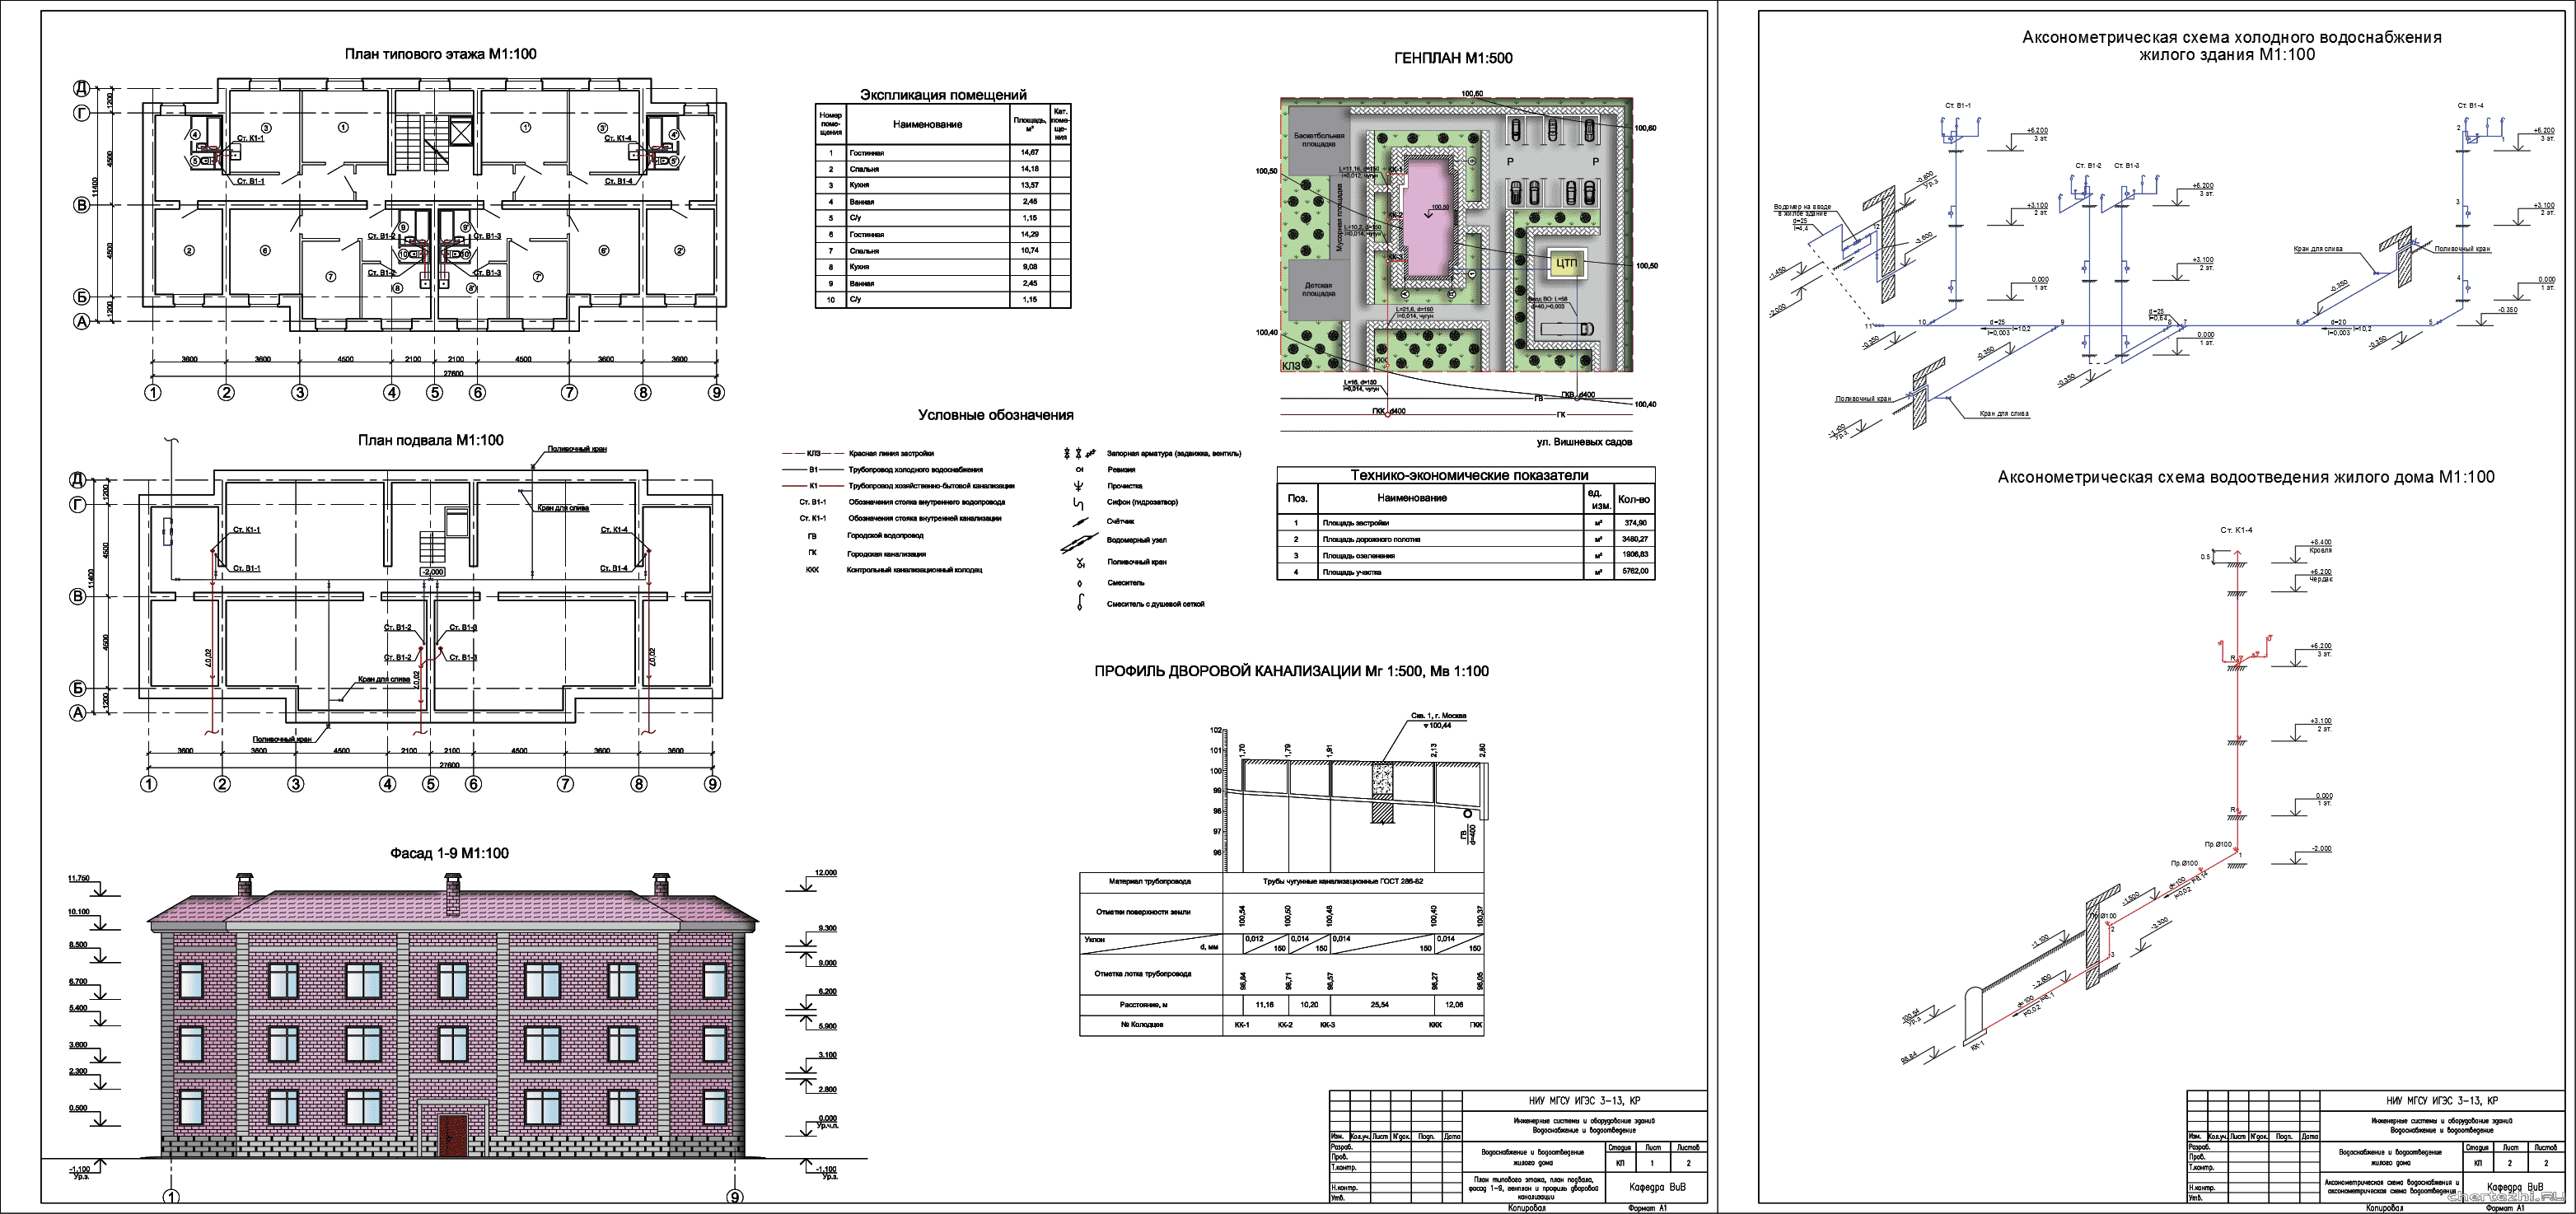 Курсовой проект - ВиВ 3-х этажного жилого дома